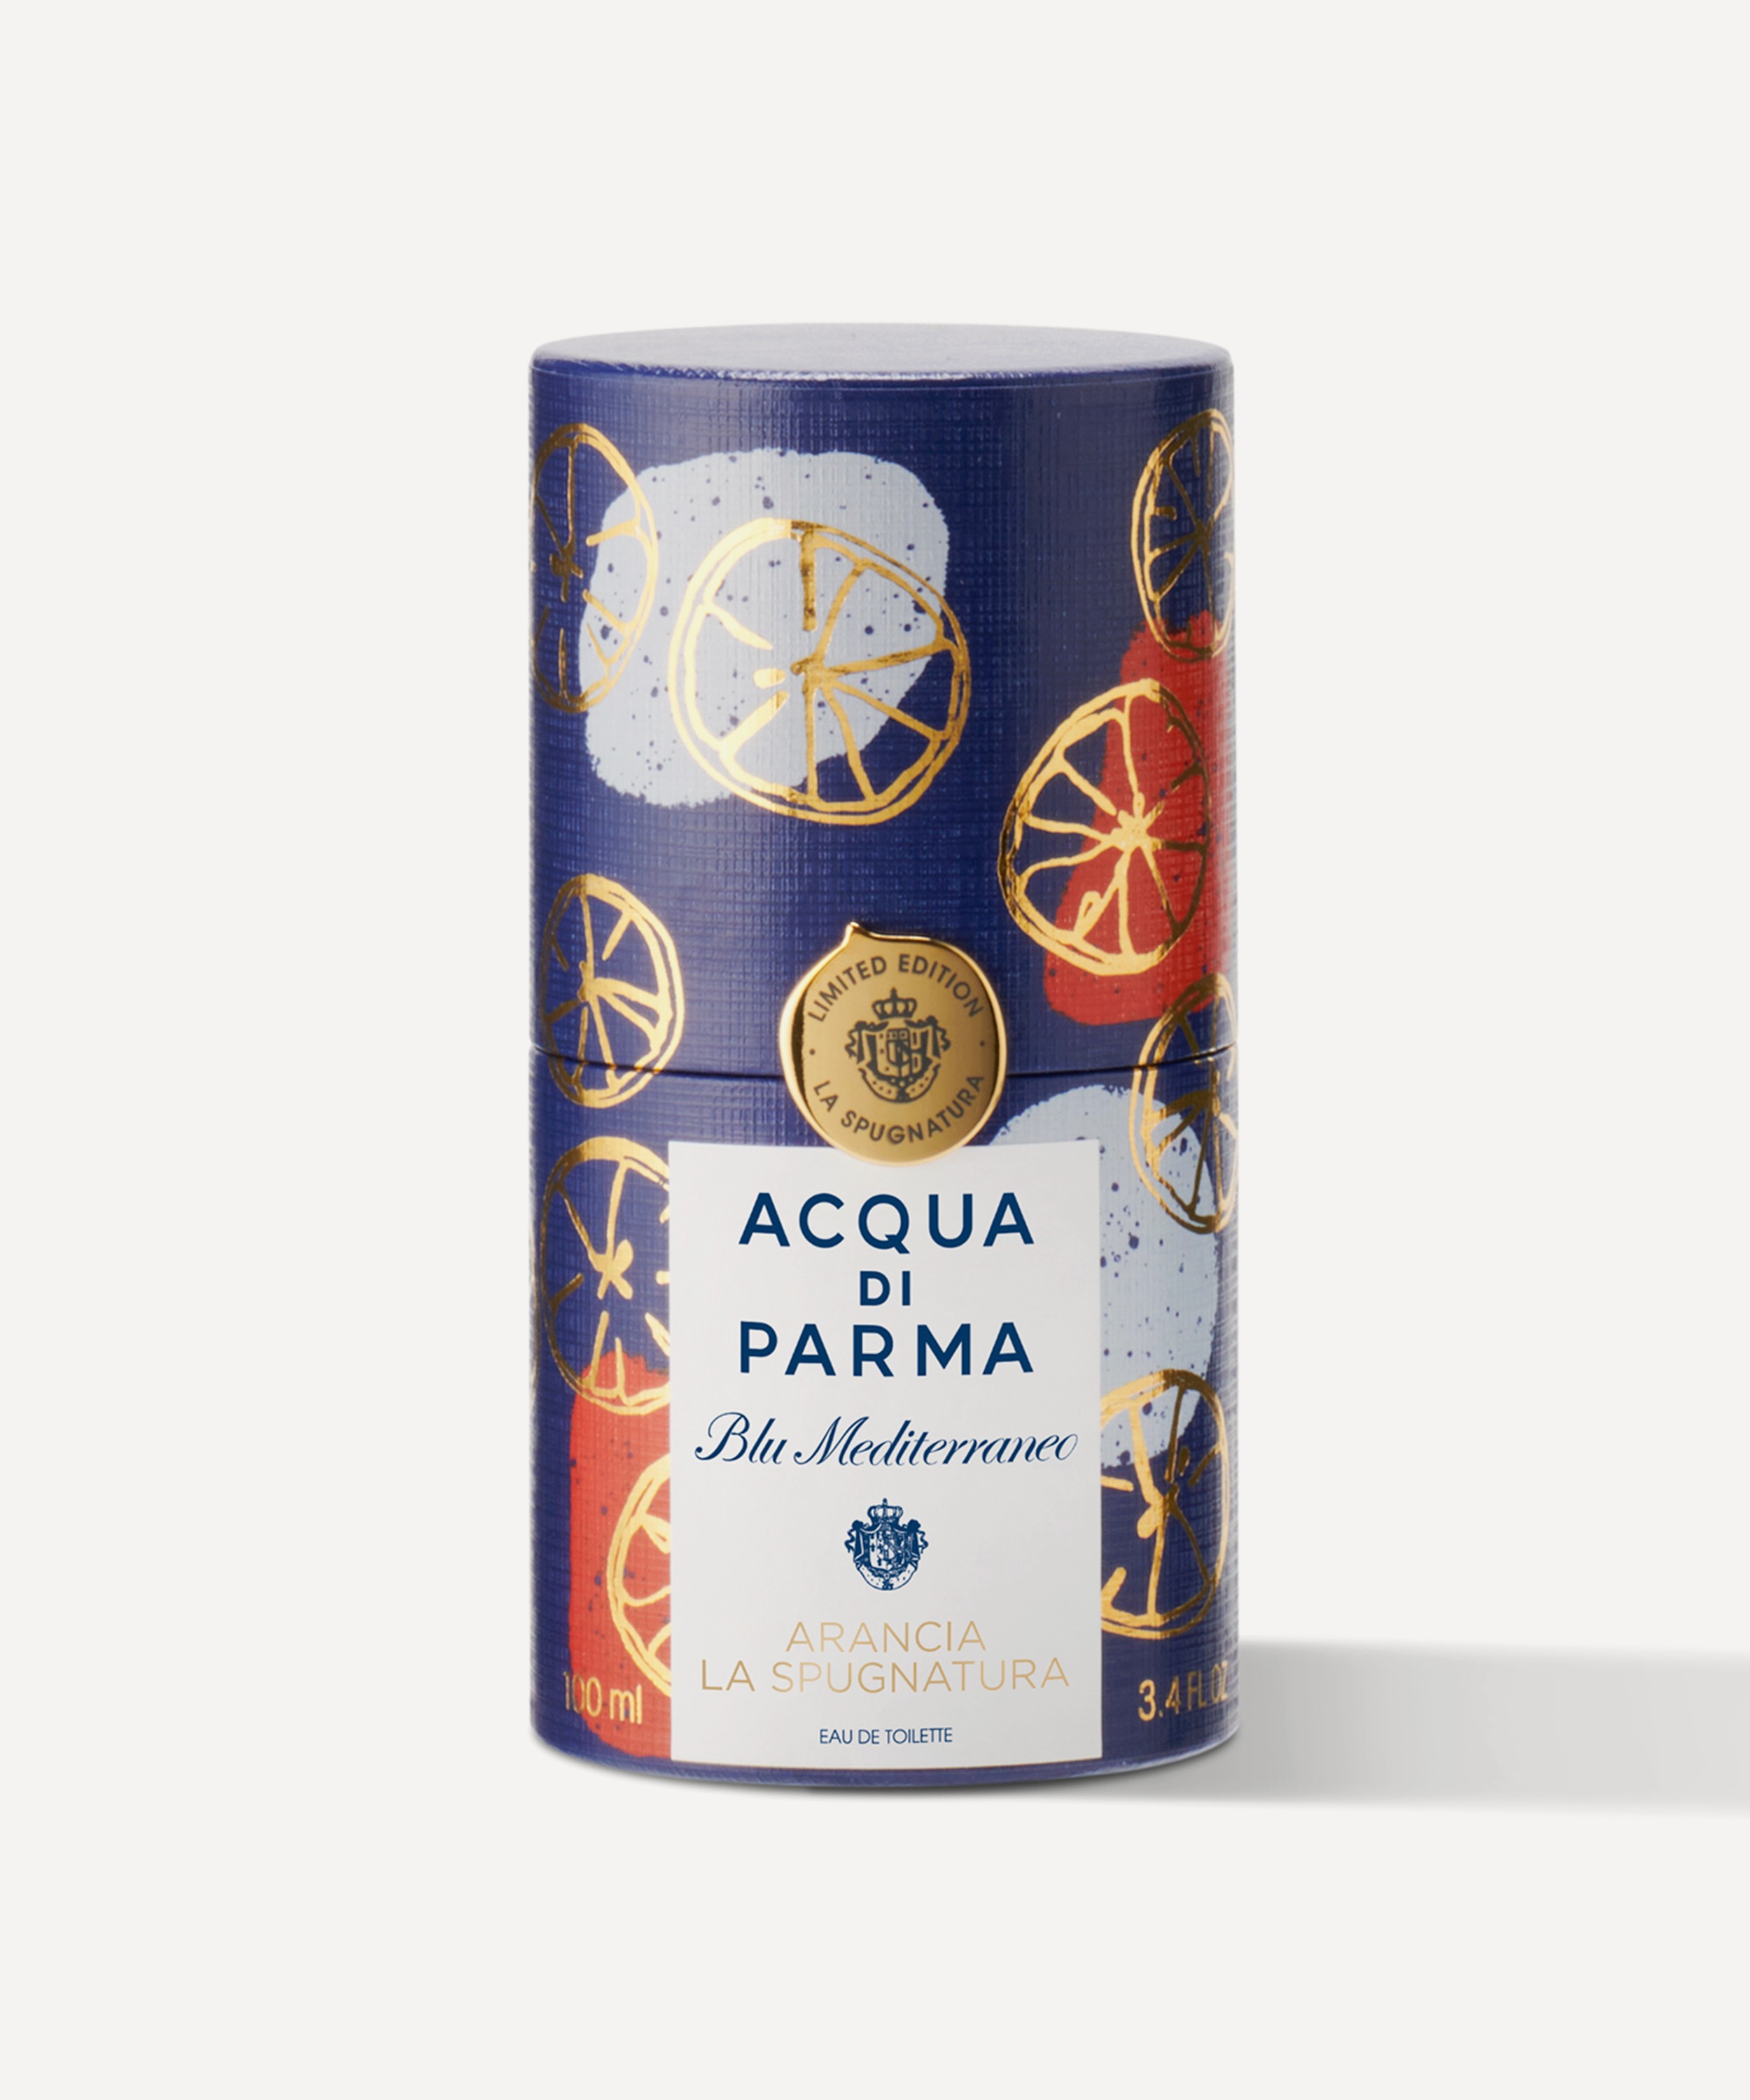 We Review Acqua di Parma's Arancia La Spugnatura